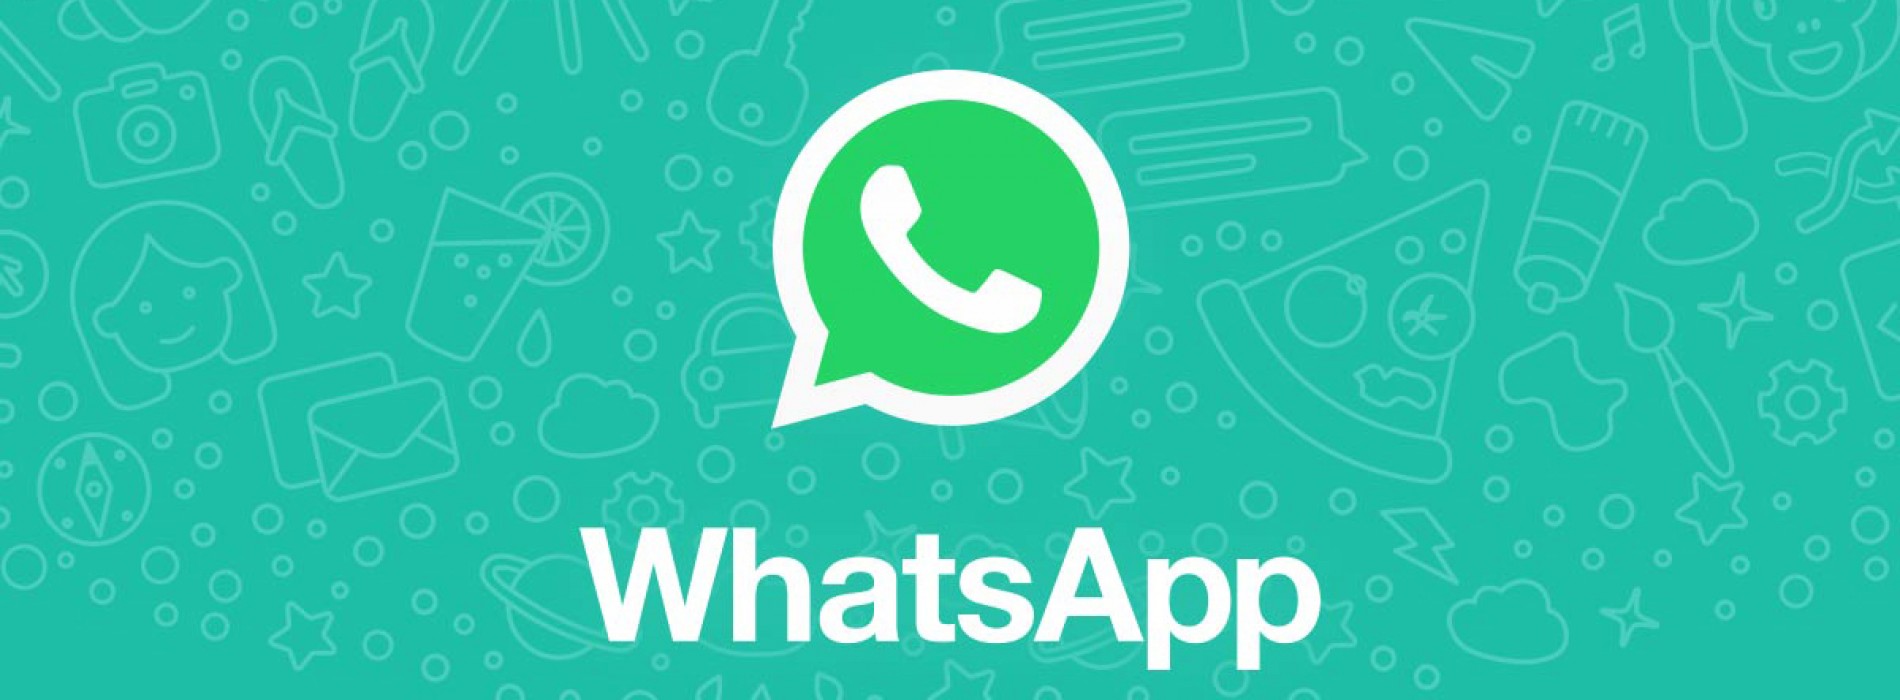 Goibibo introduces new login feature via WhatsApp